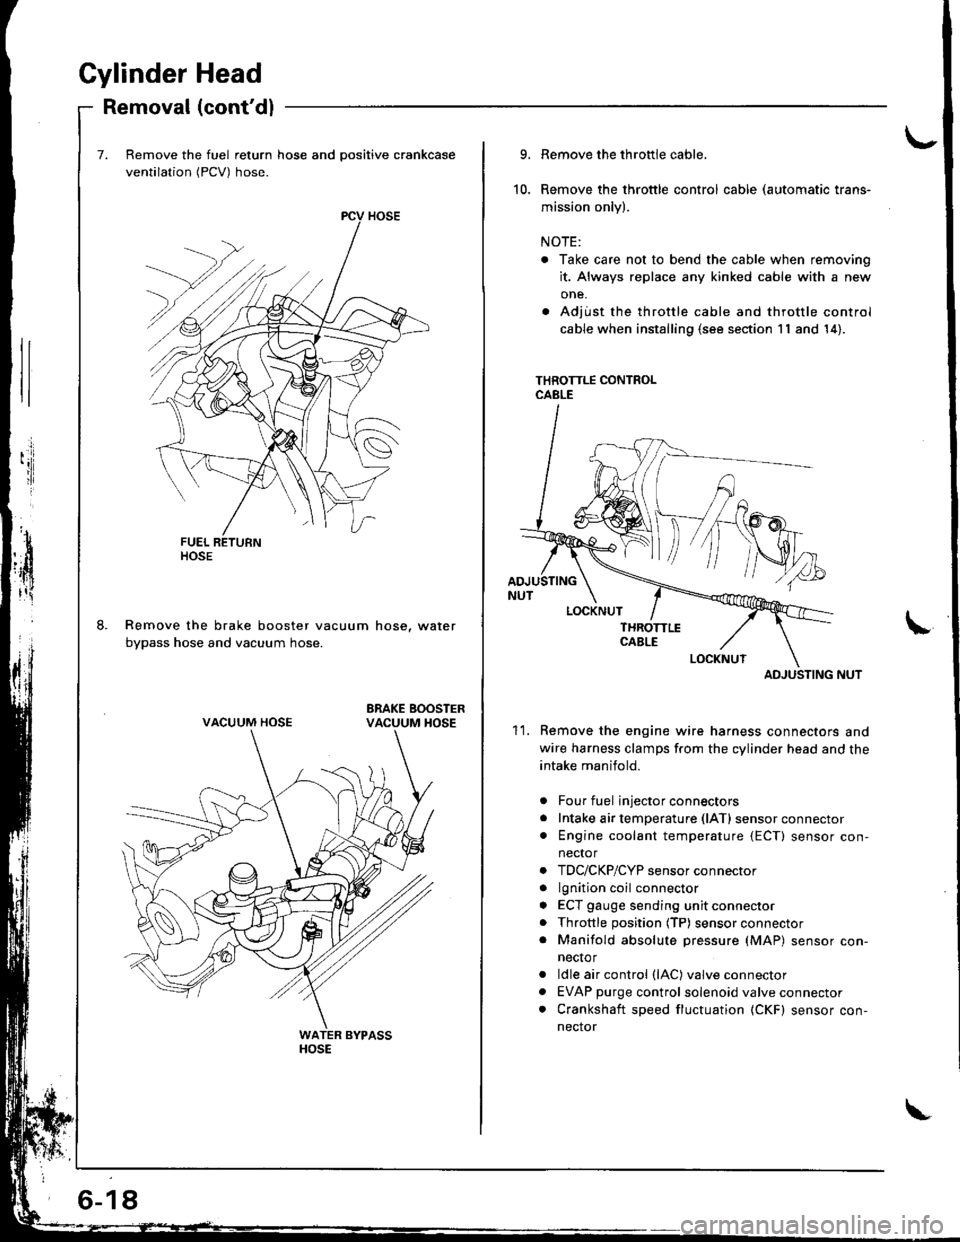 HONDA INTEGRA 1998 4.G Workshop Manual Gylinder Head
Removal (contdl
Remove the fuel return hose and positive crankcase
ventilation (PCV) hose.
Remove the brake booster vacuum hose, water
bypass hose and vacuum hose.
ltosE
VACUUM HOSE
6-1